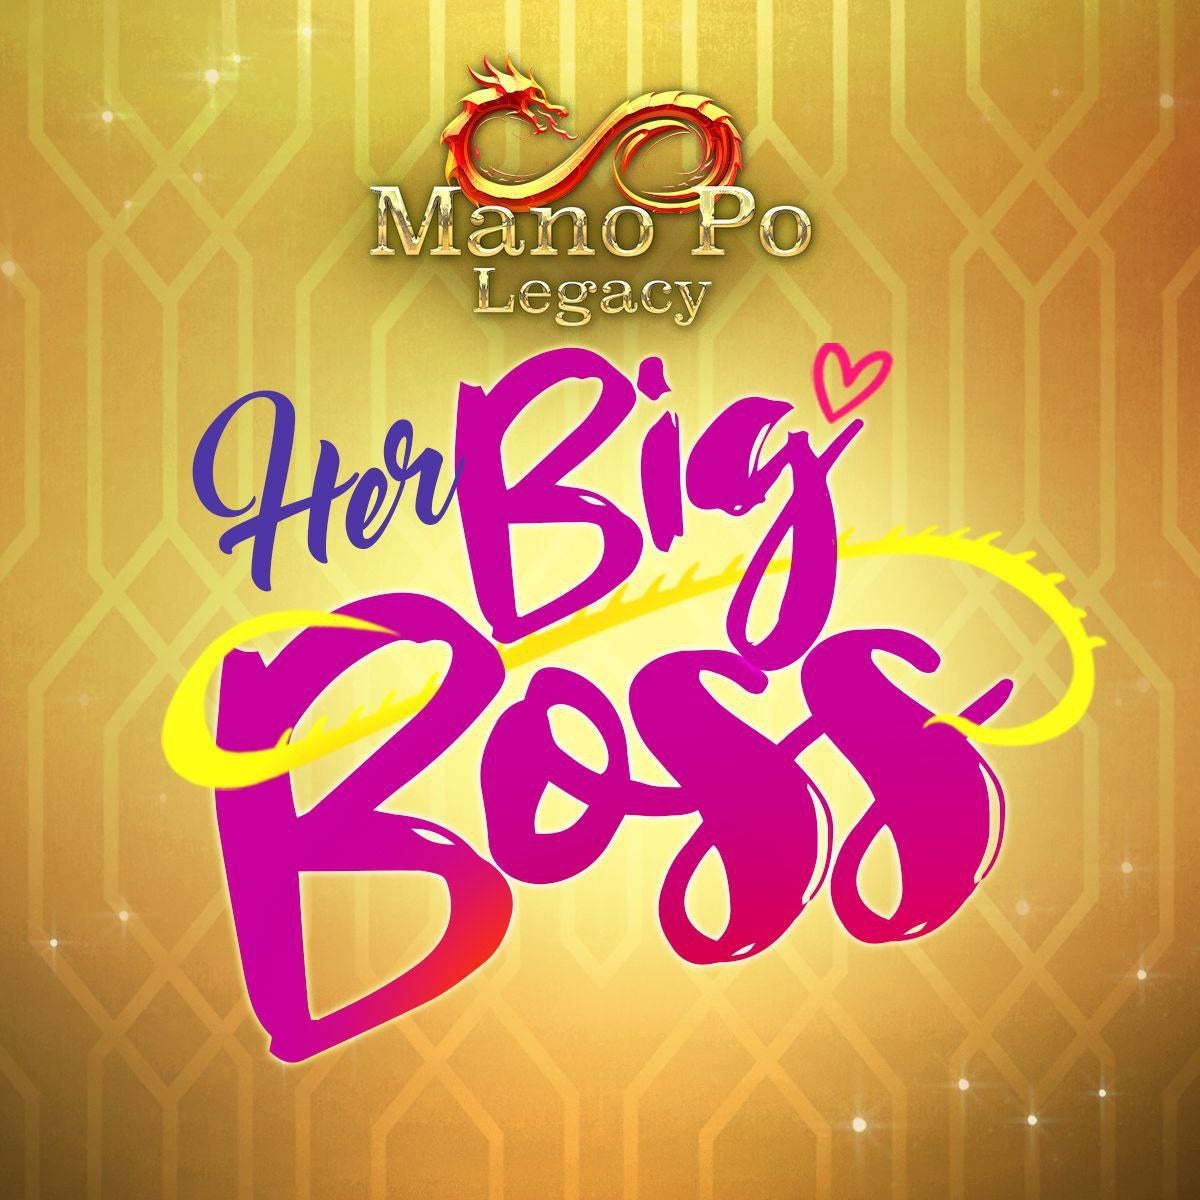 TV ratings for Mano Po Legacy: Her Big Boss in Brazil. GMA TV series